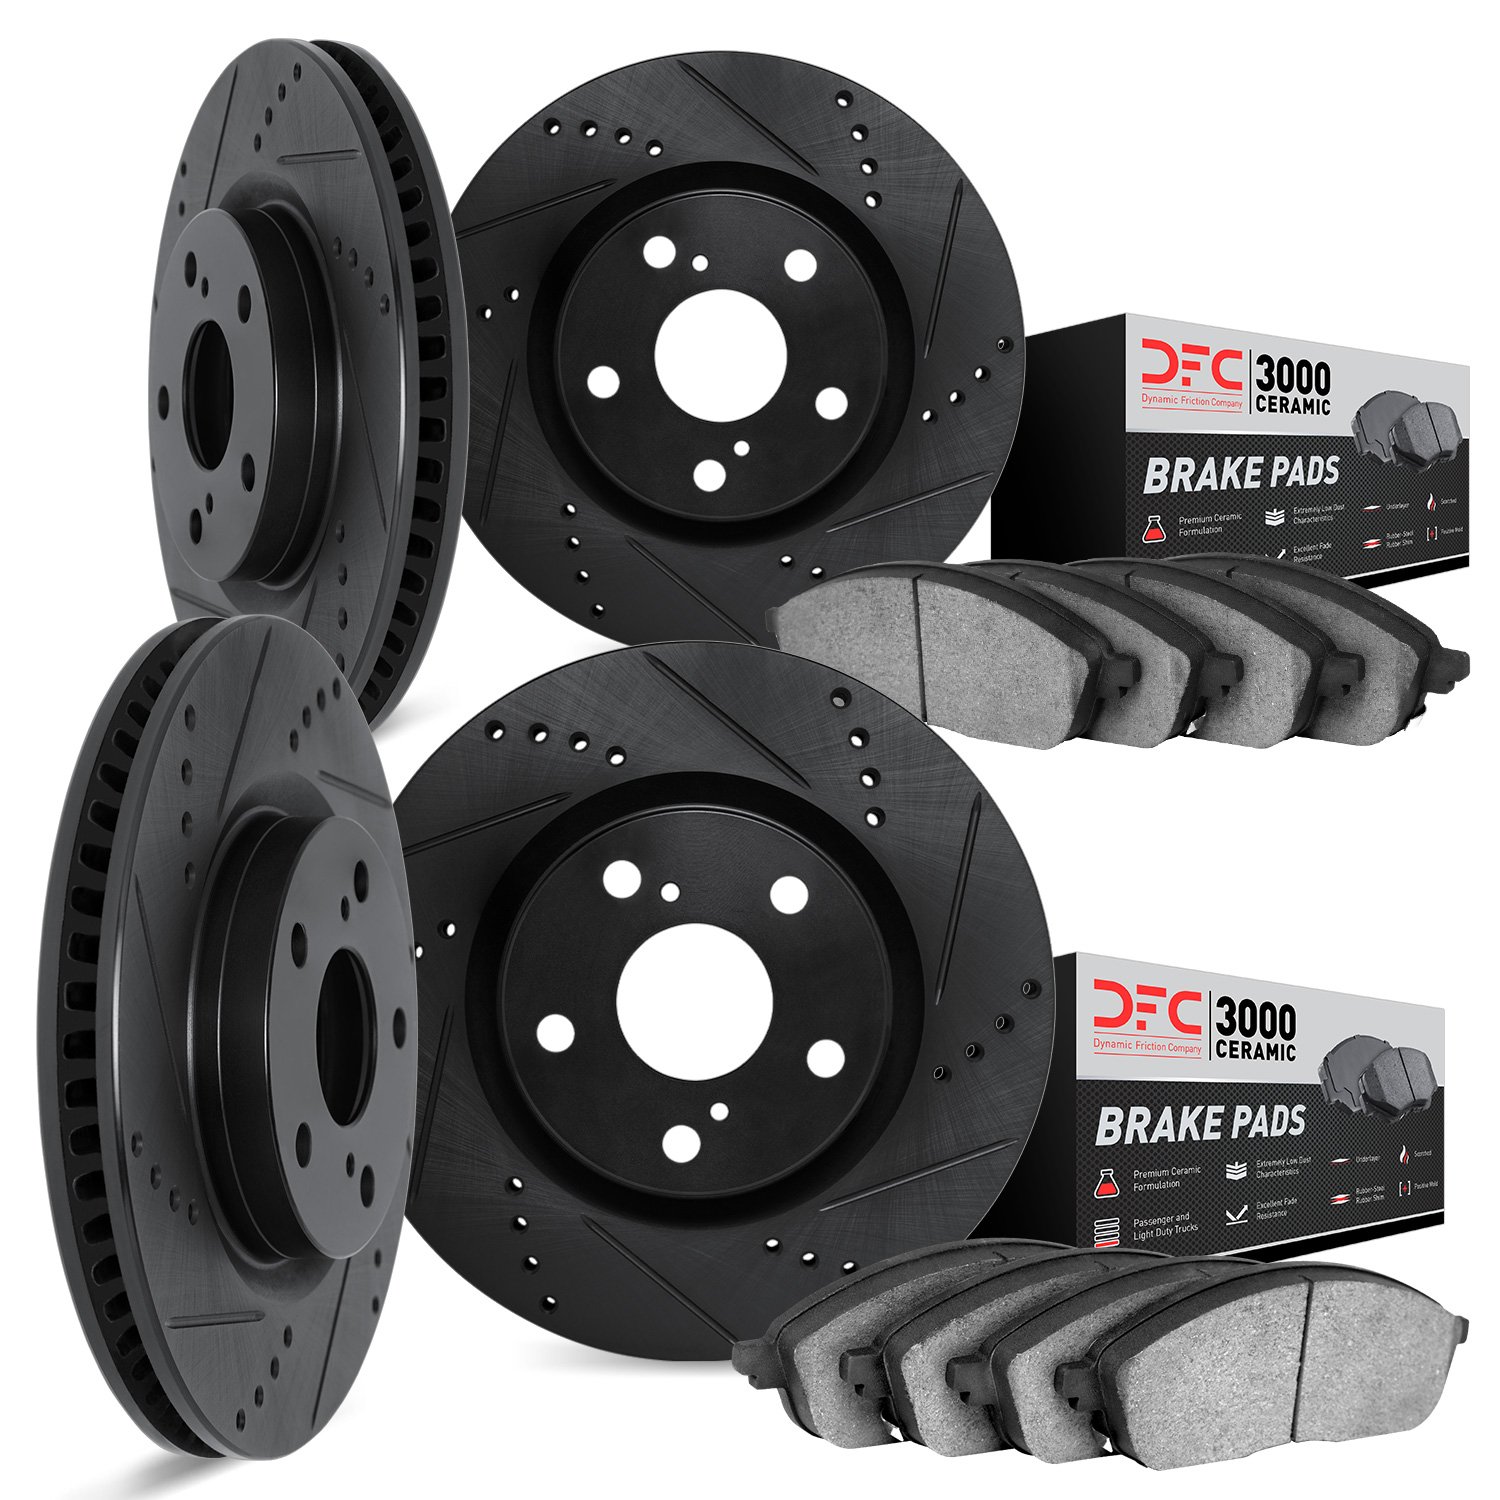 8304-54062 Drilled/Slotted Brake Rotors with 3000-Series Ceramic Brake Pads Kit [Black], 2012-2014 Ford/Lincoln/Mercury/Mazda, P